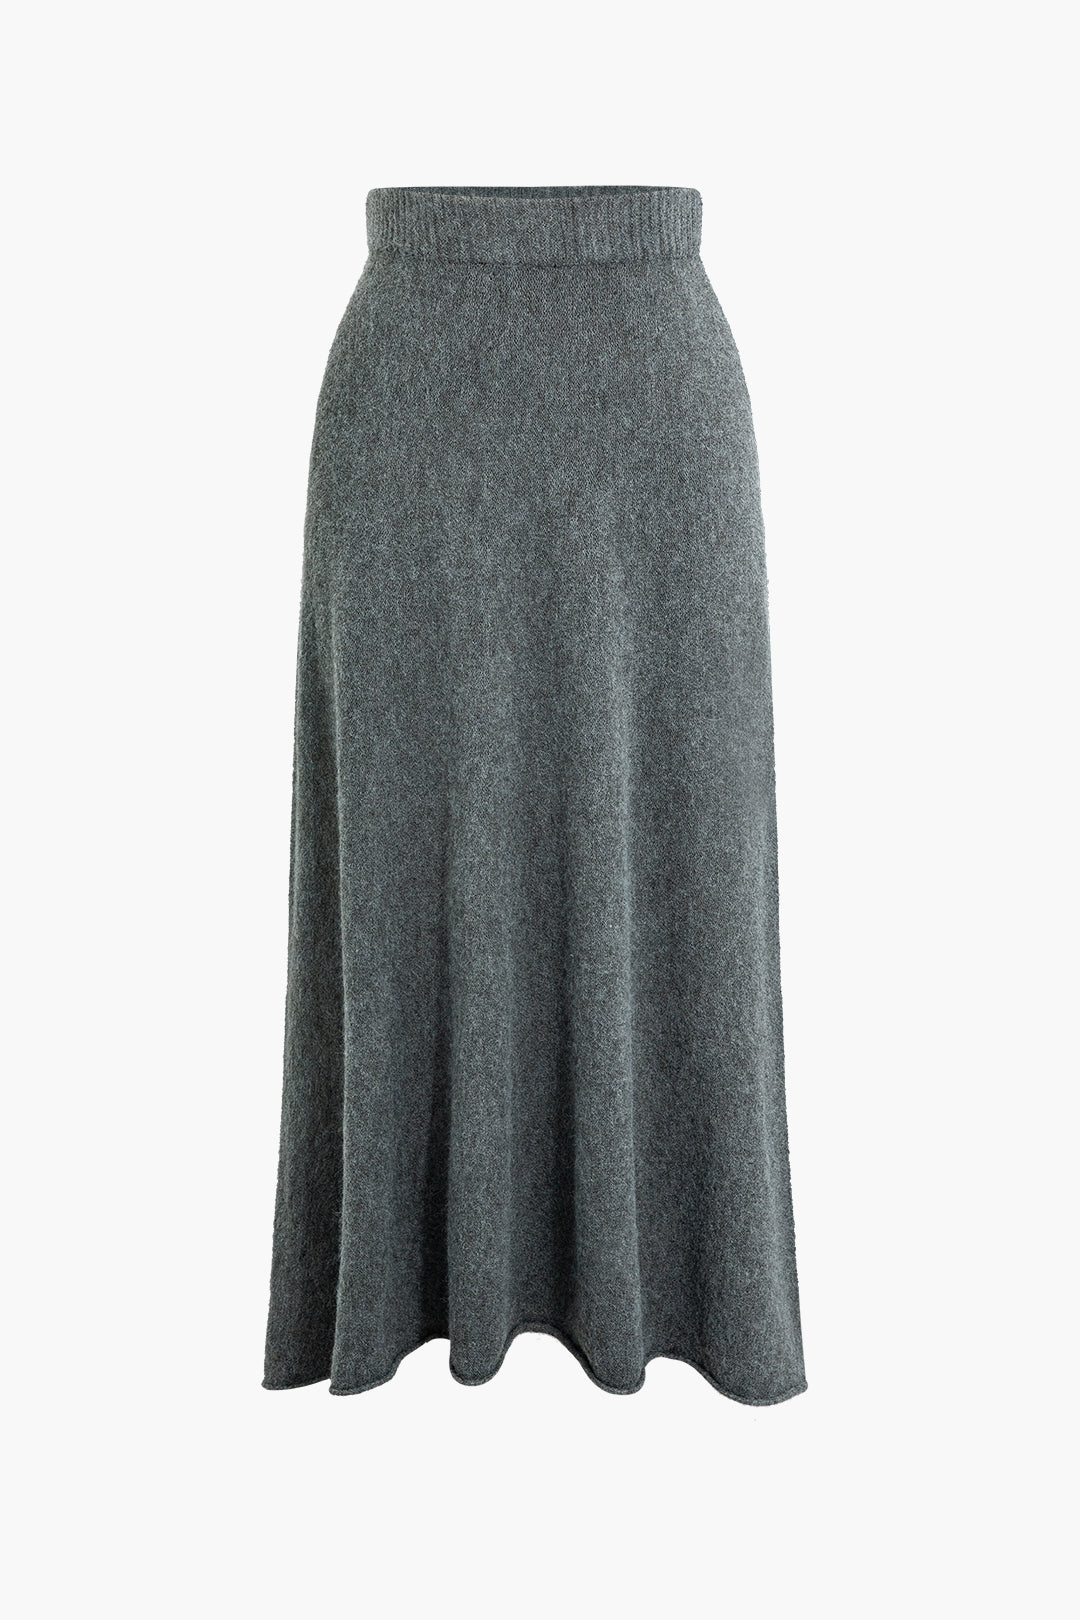 Basic Long Sleeve Knit Top And Knit High Waisted Draped Midi Skirt Set